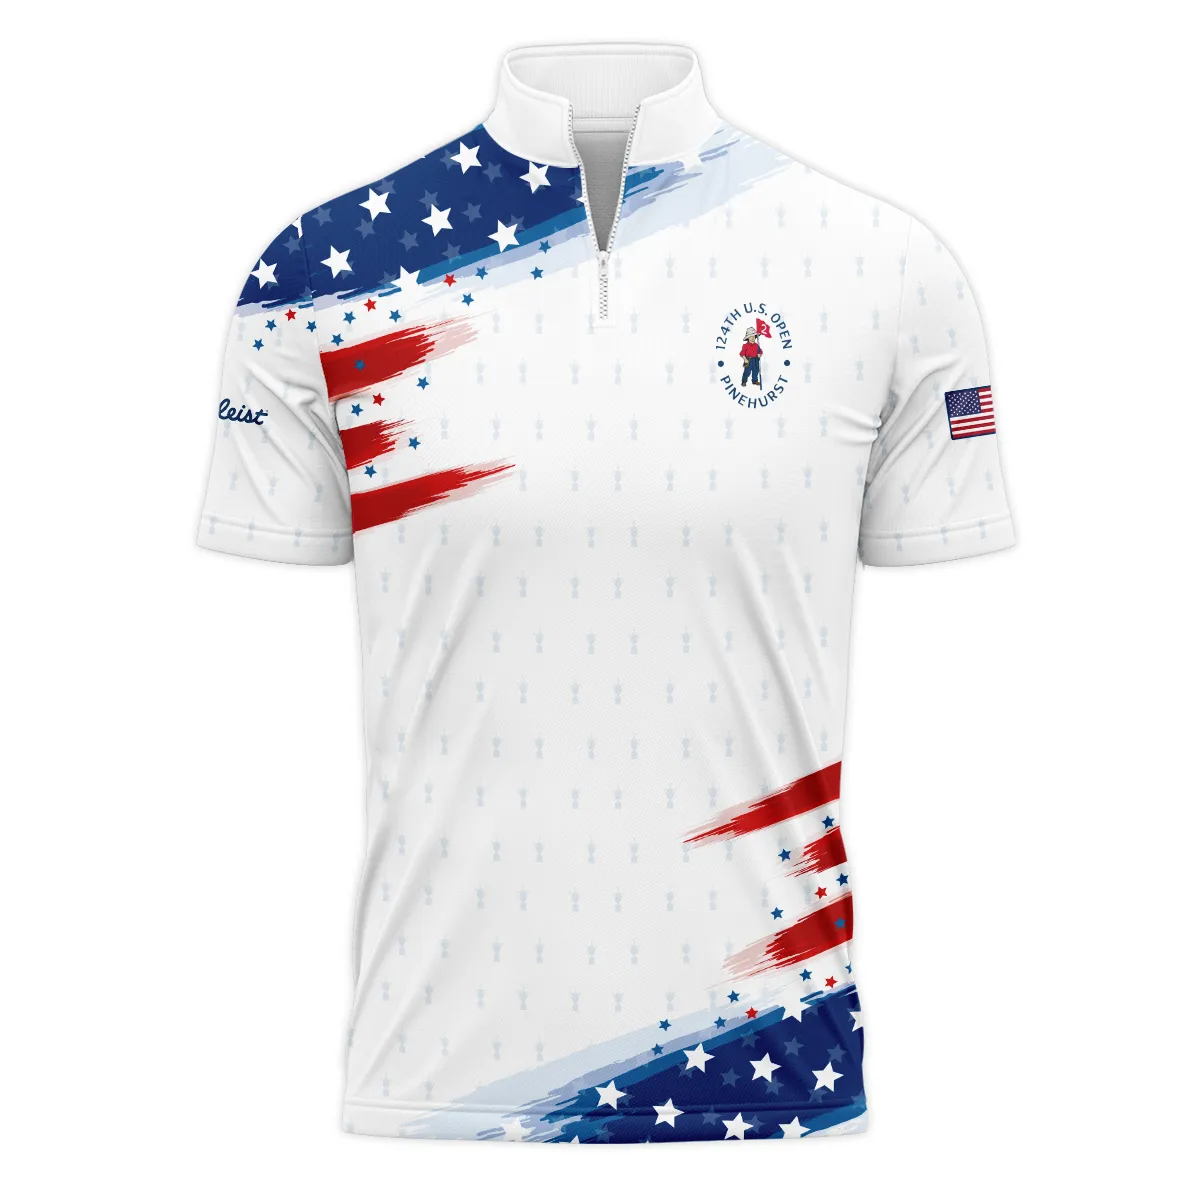 Golf Flag American Loves 124th U.S. Open Pinehurst Titleist Zipper Polo Shirt Style Classic